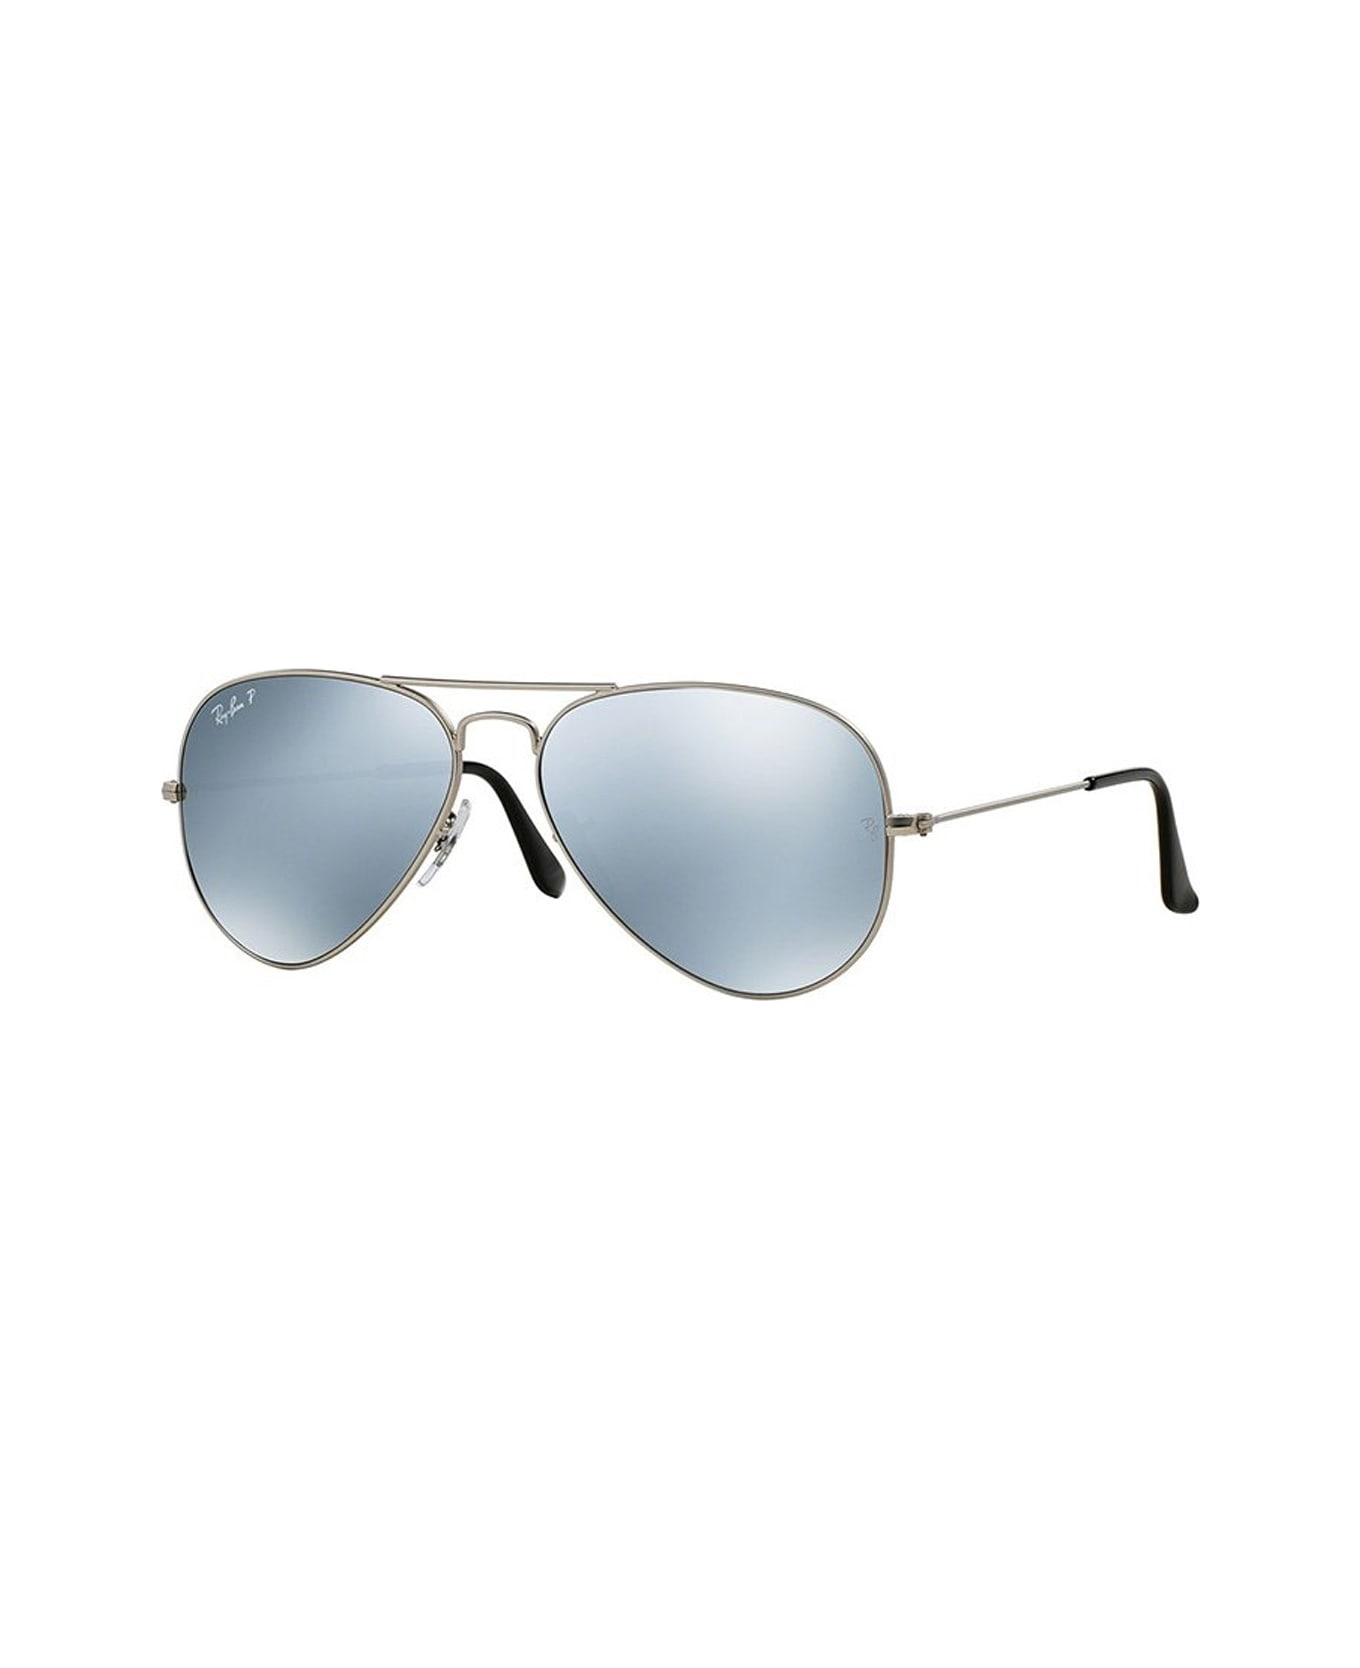 Ray-Ban 3025 Sole Sunglasses - Argento サングラス